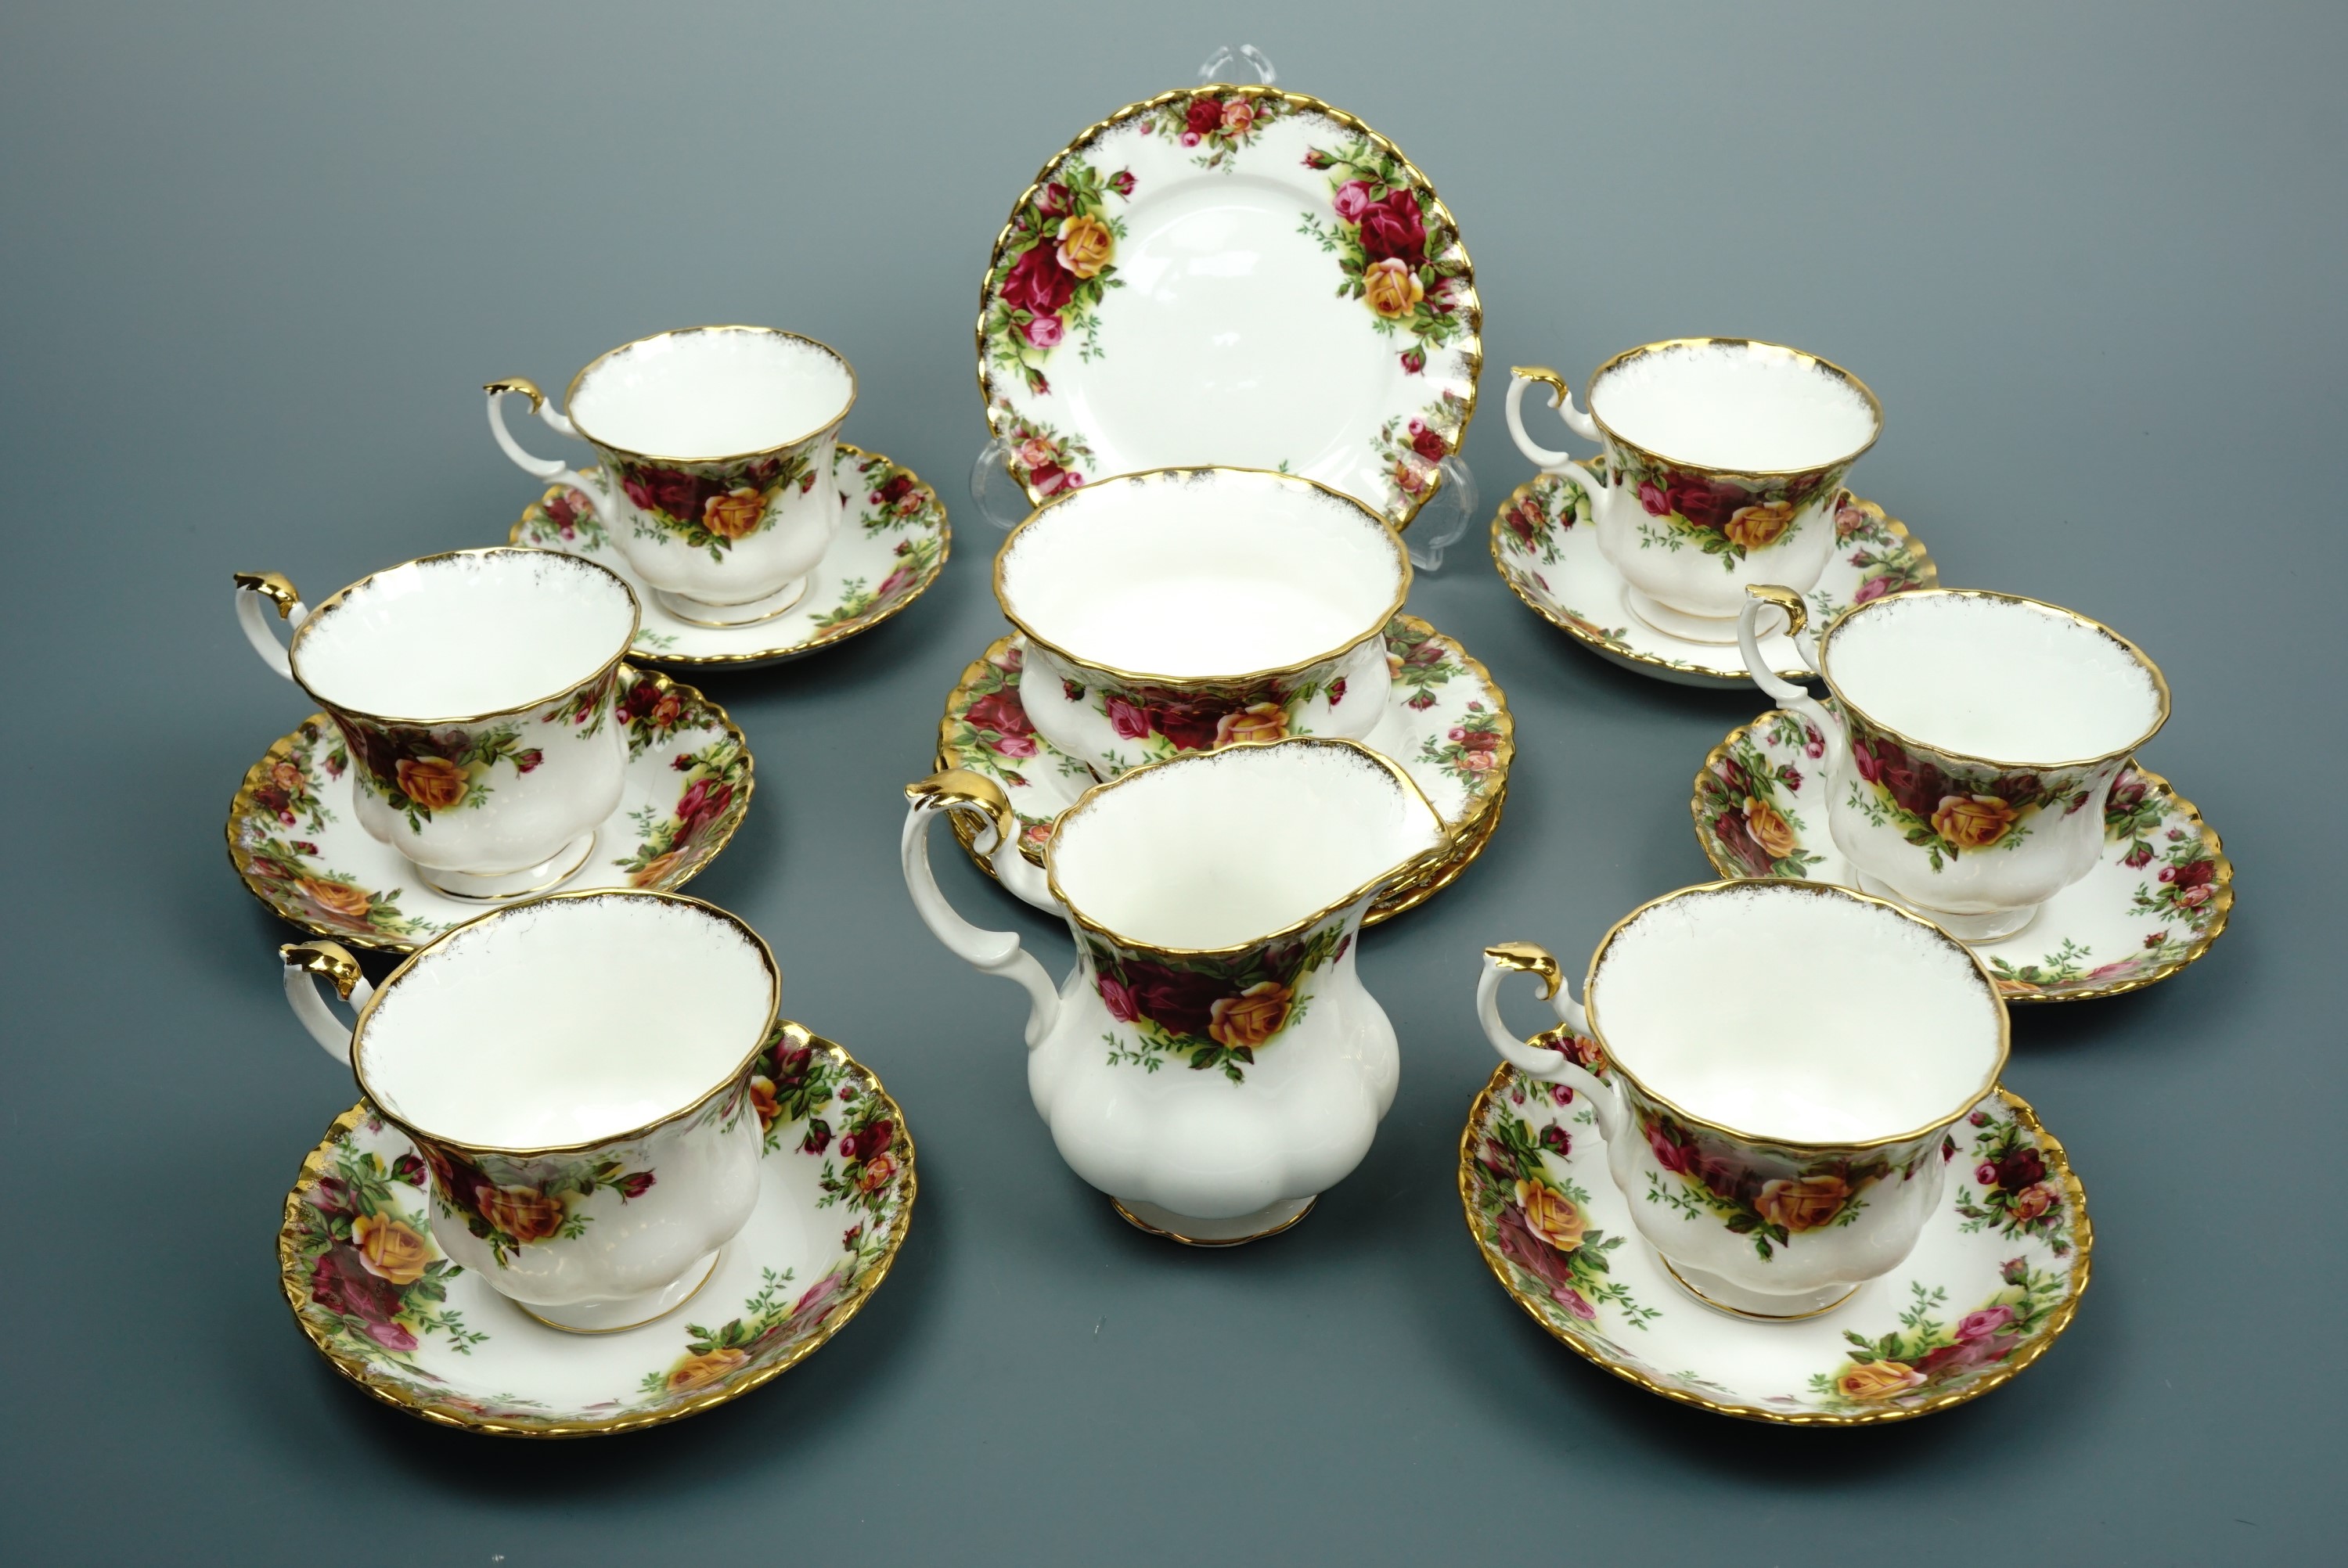 A Royal Albert Old Country Rose tea set